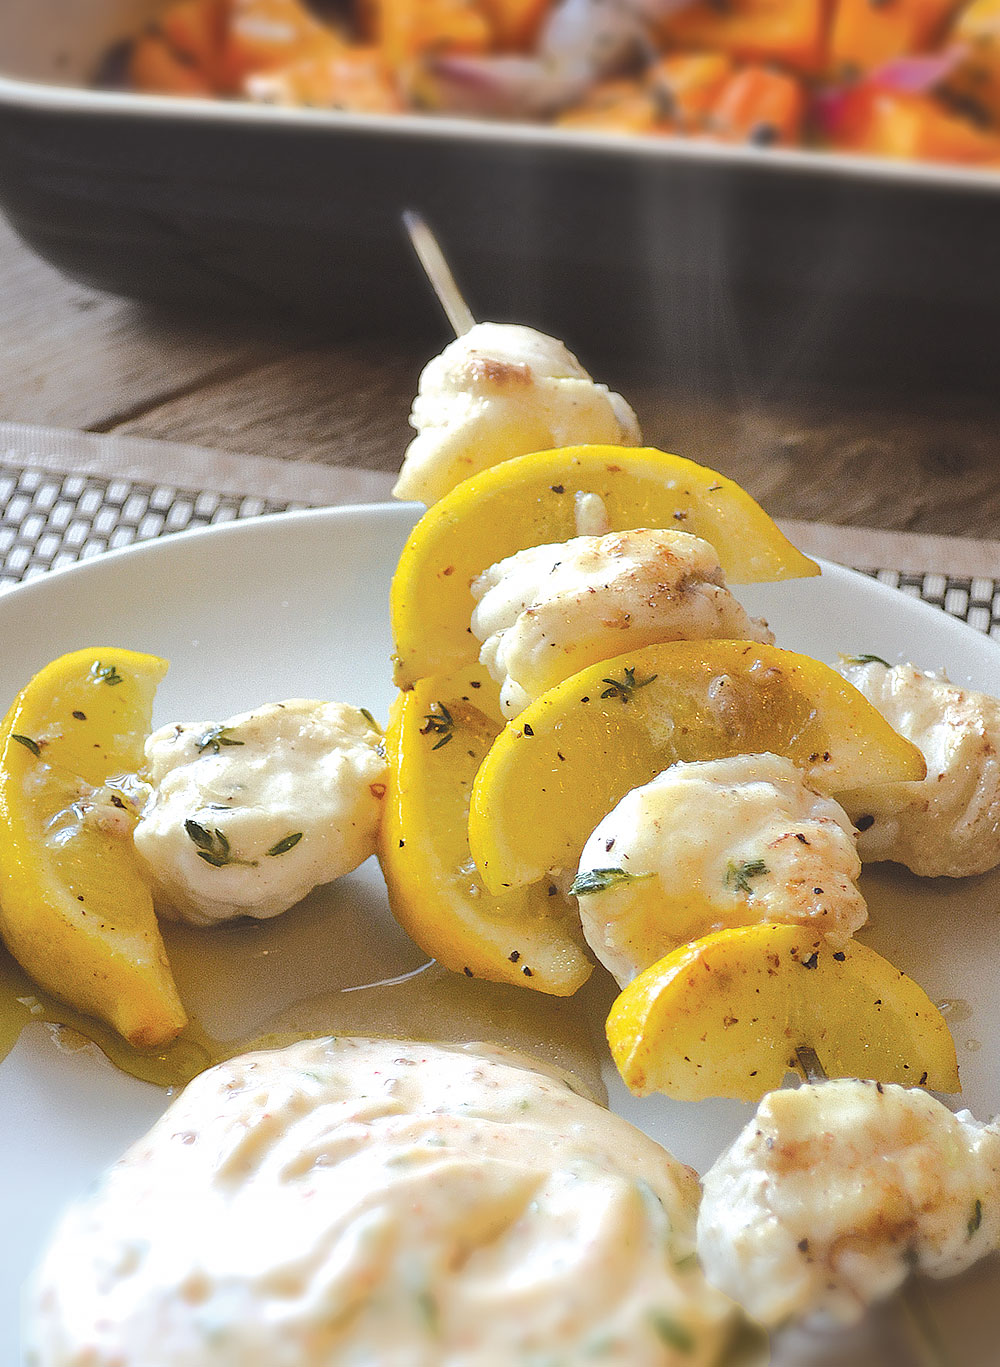 Monkfish & lemon skewers with a mint & garlic dip - The En-Two